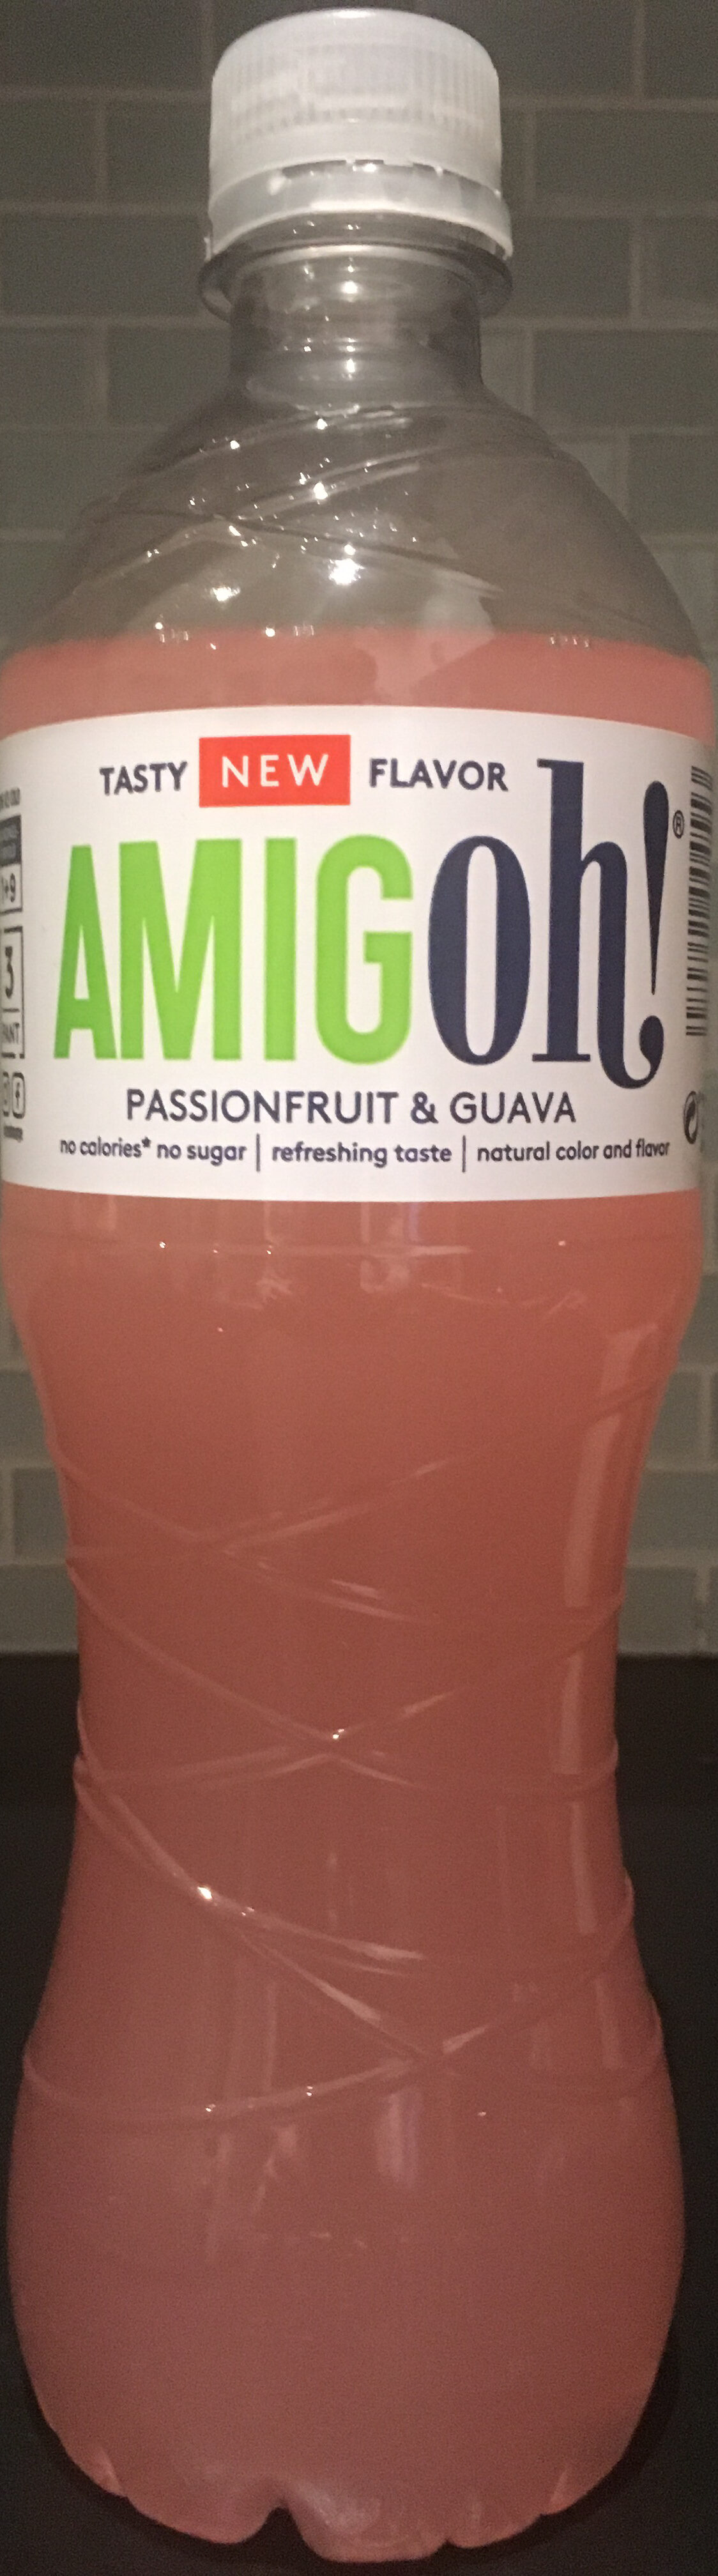 AmigOh! Passionfruit & Guava - Product - nb